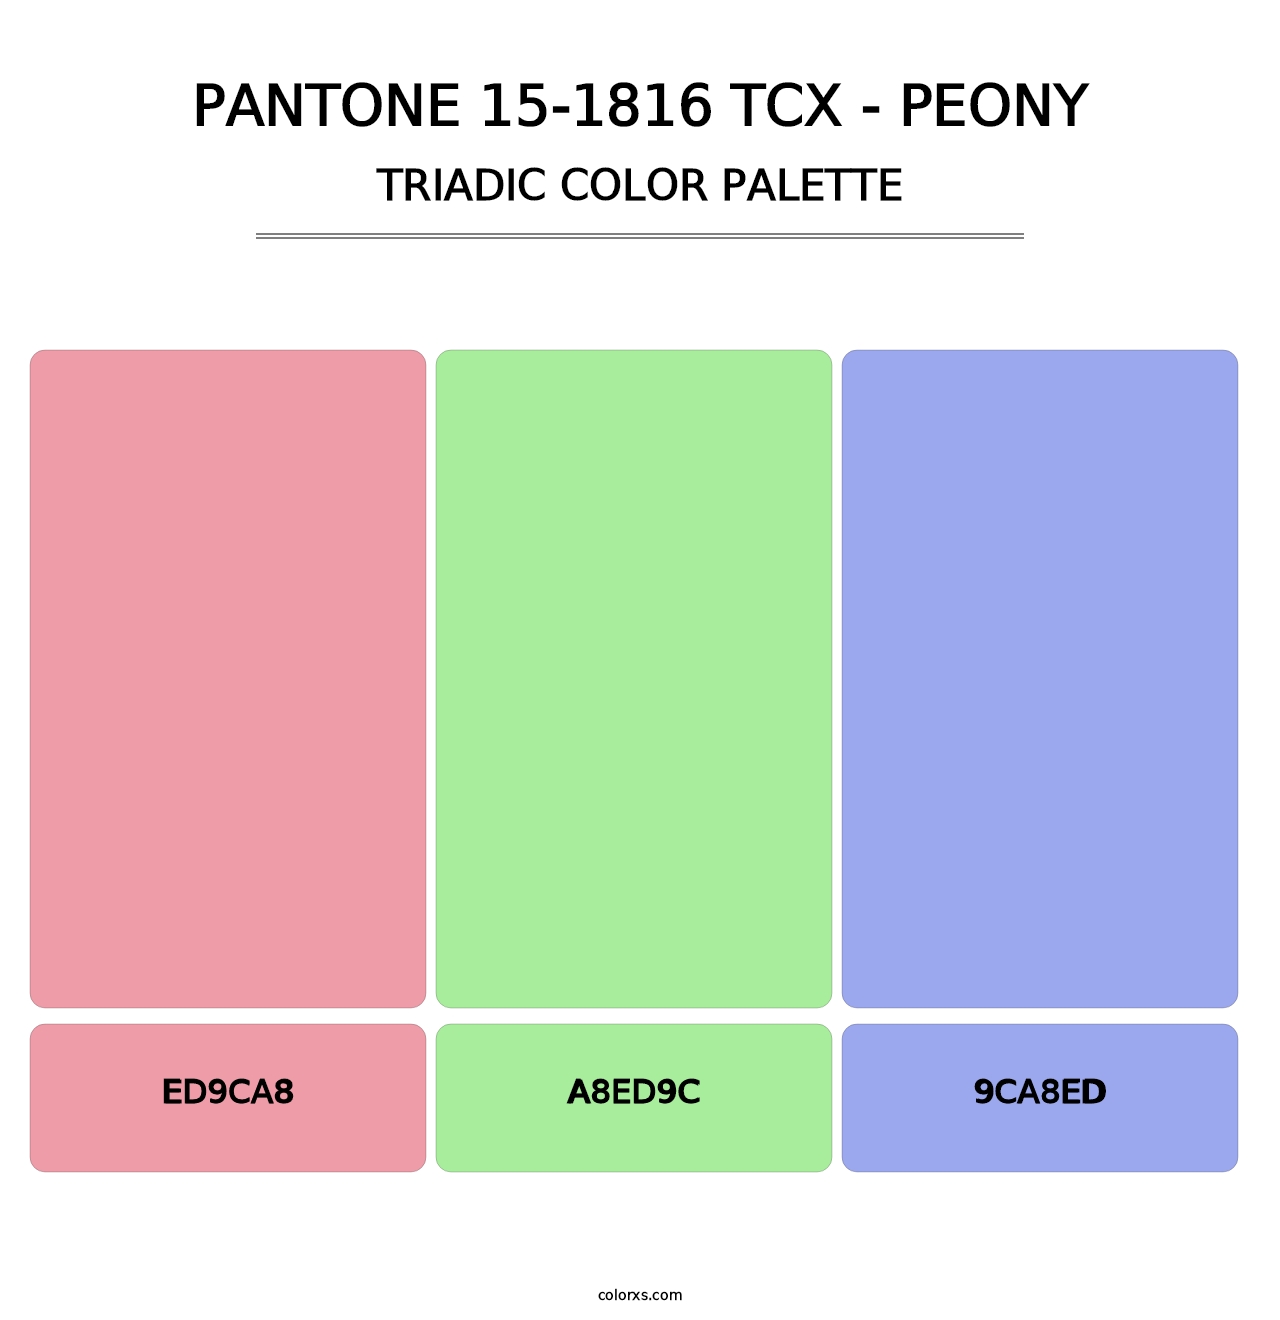 PANTONE 15-1816 TCX - Peony - Triadic Color Palette